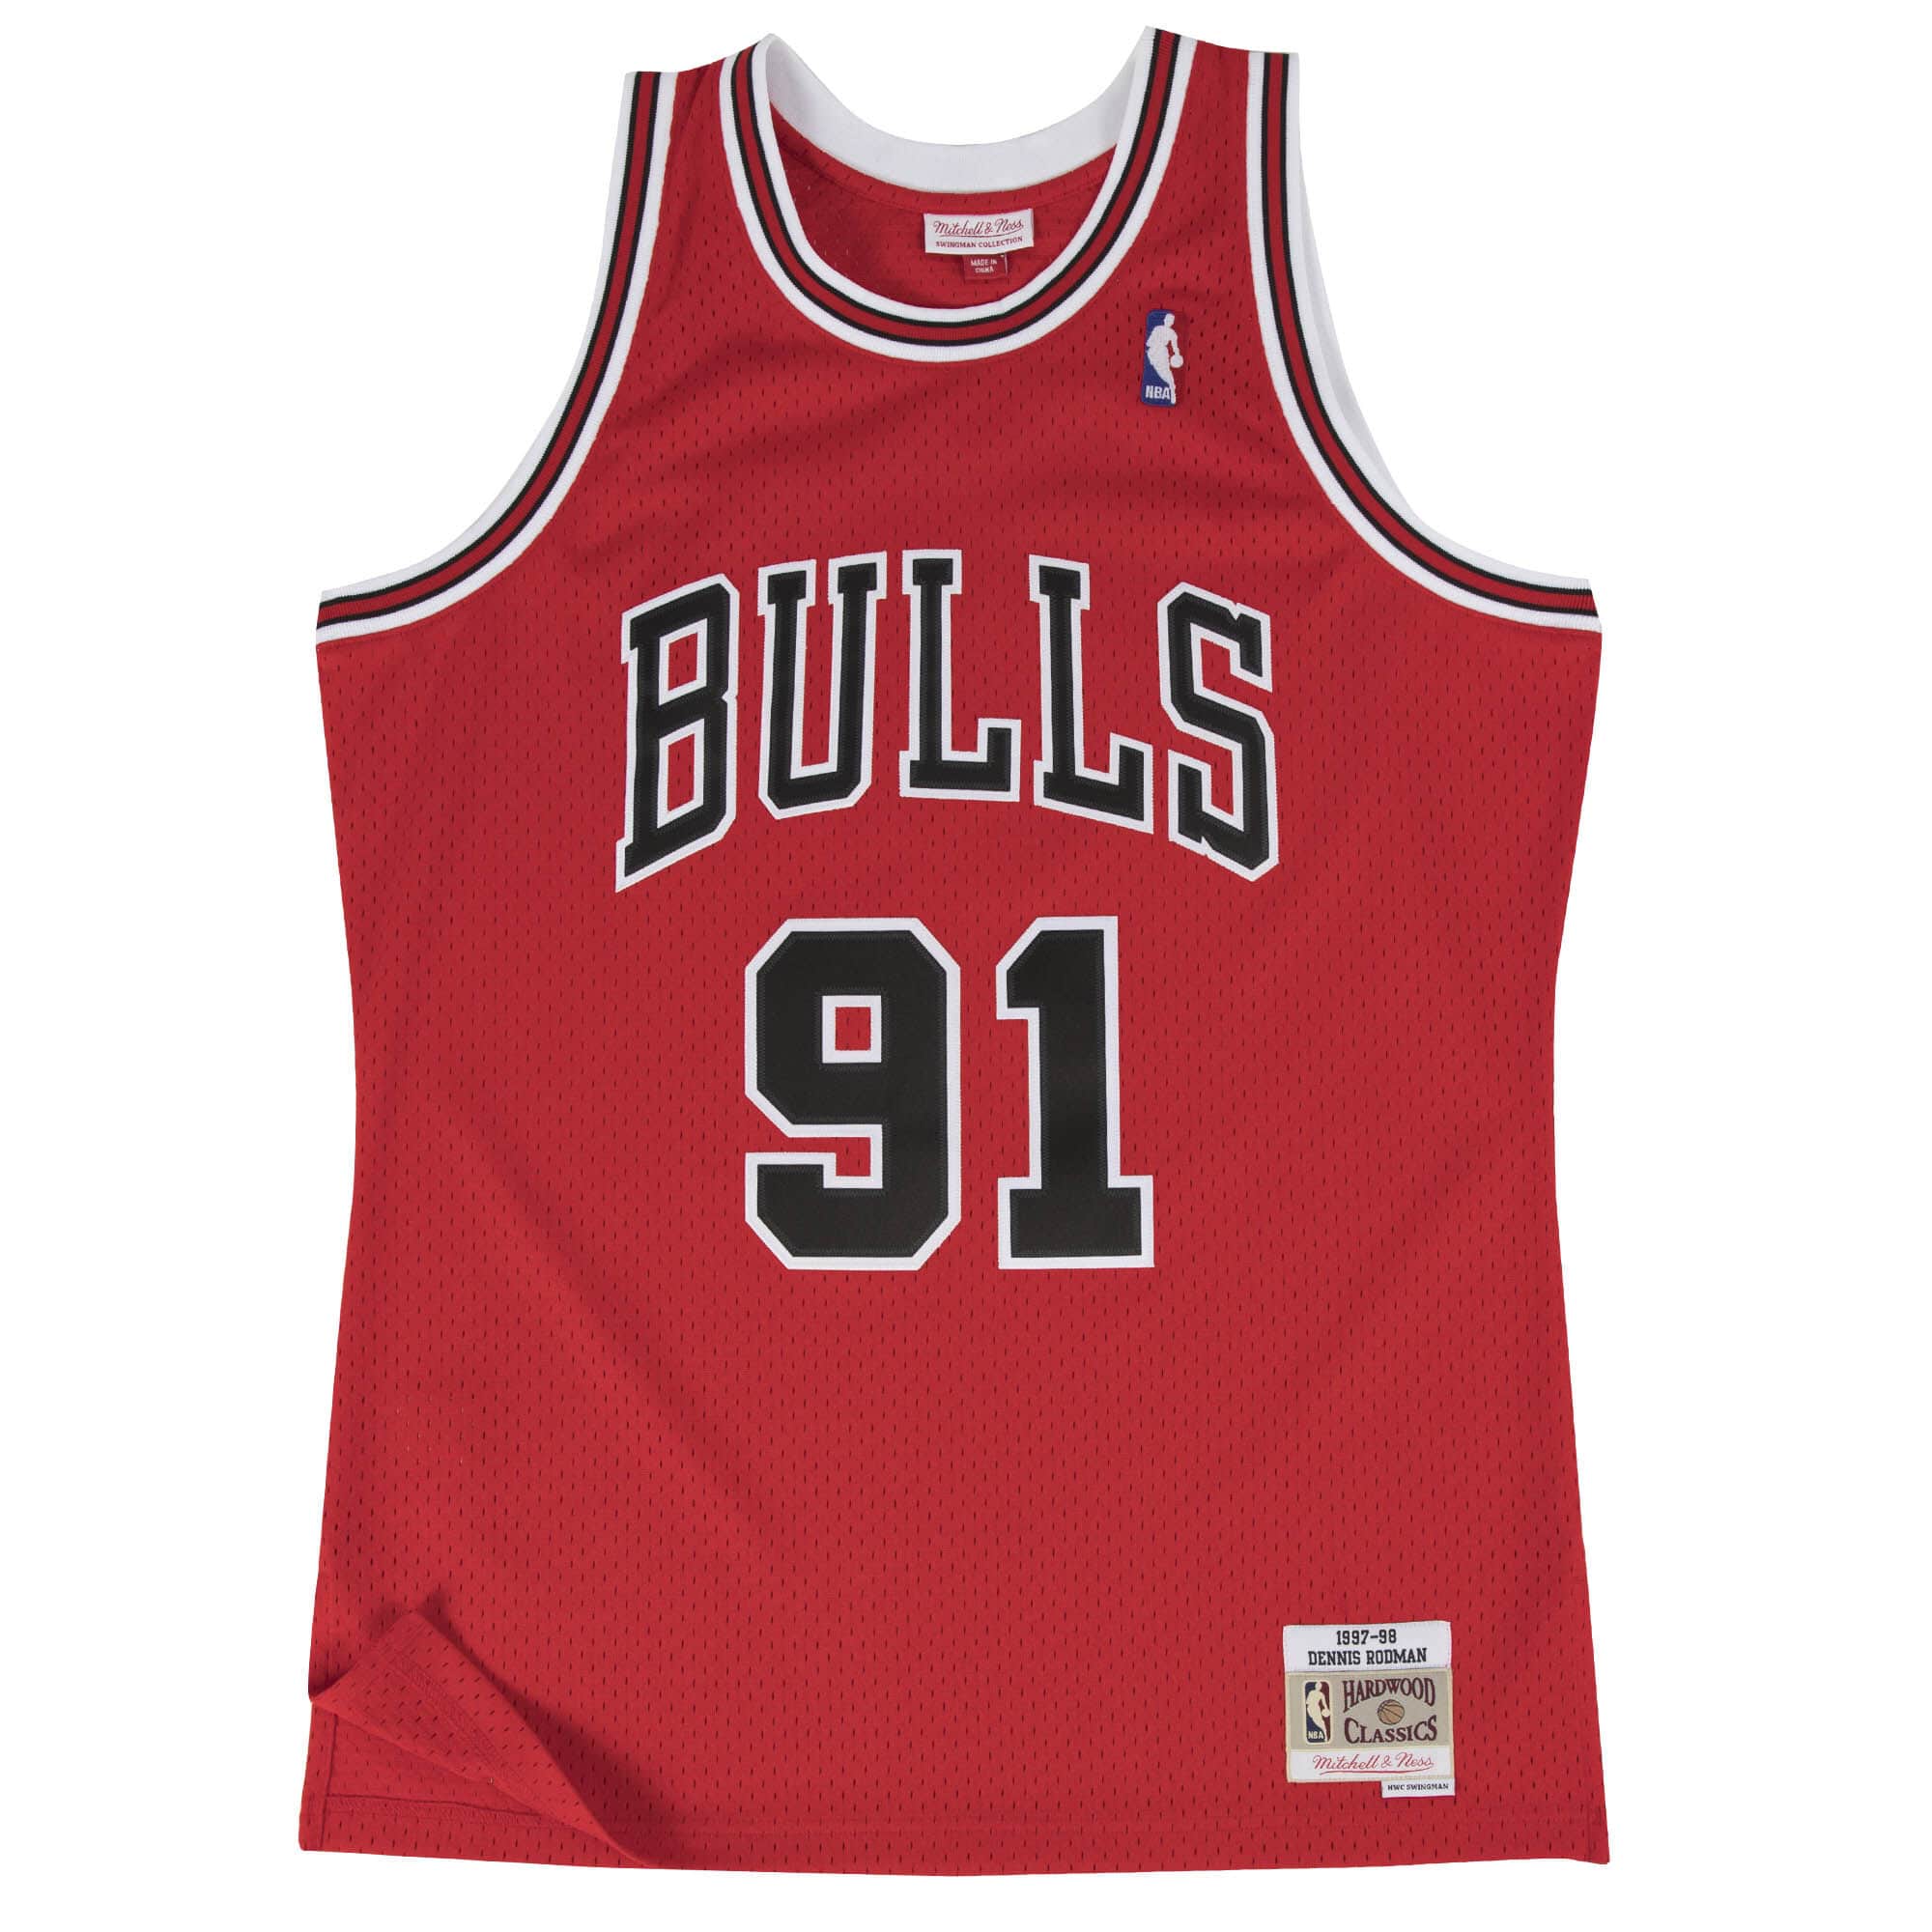 MITCHELL & NESS RED NBA CHICAGO BULLS ROAD 1997-98 DENNIS RODMAN SWINGMAN JERSEY